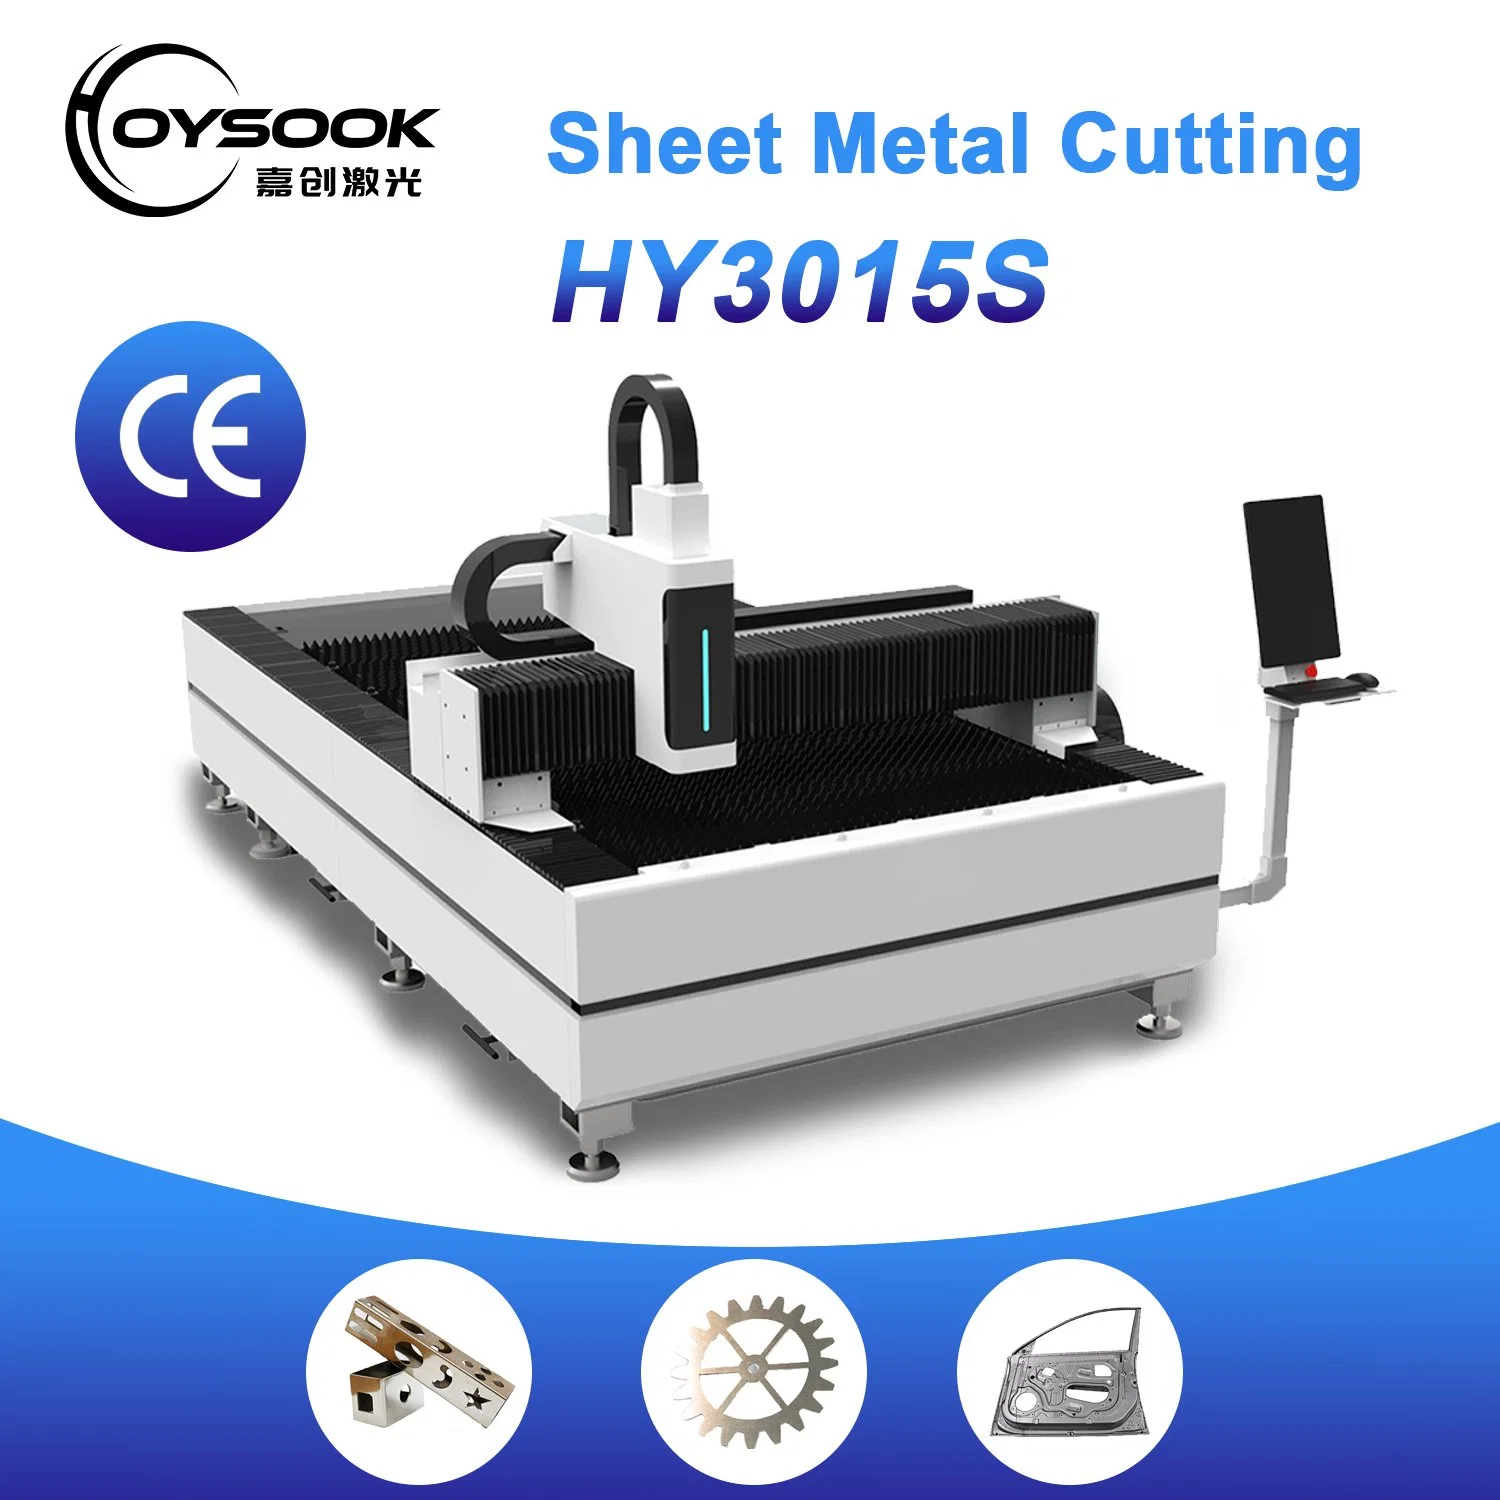 3kw 3015 Fiber Laser Cutting Machine Sample Product for Sheet Metal